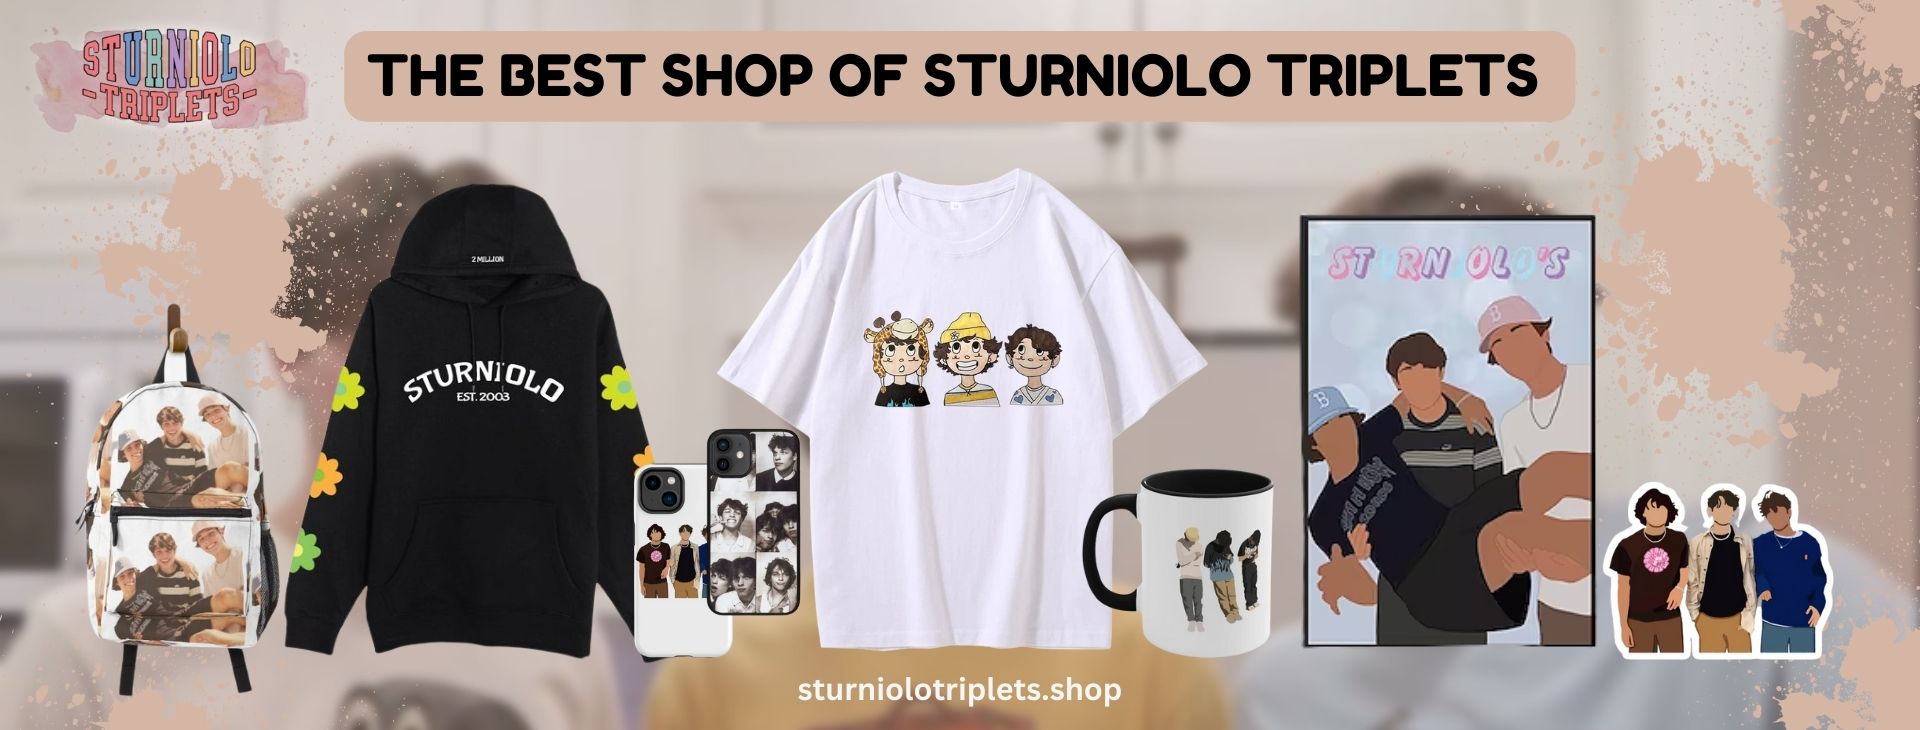 sturniolo triplets Store Banner - Sturniolo Triplets Shop